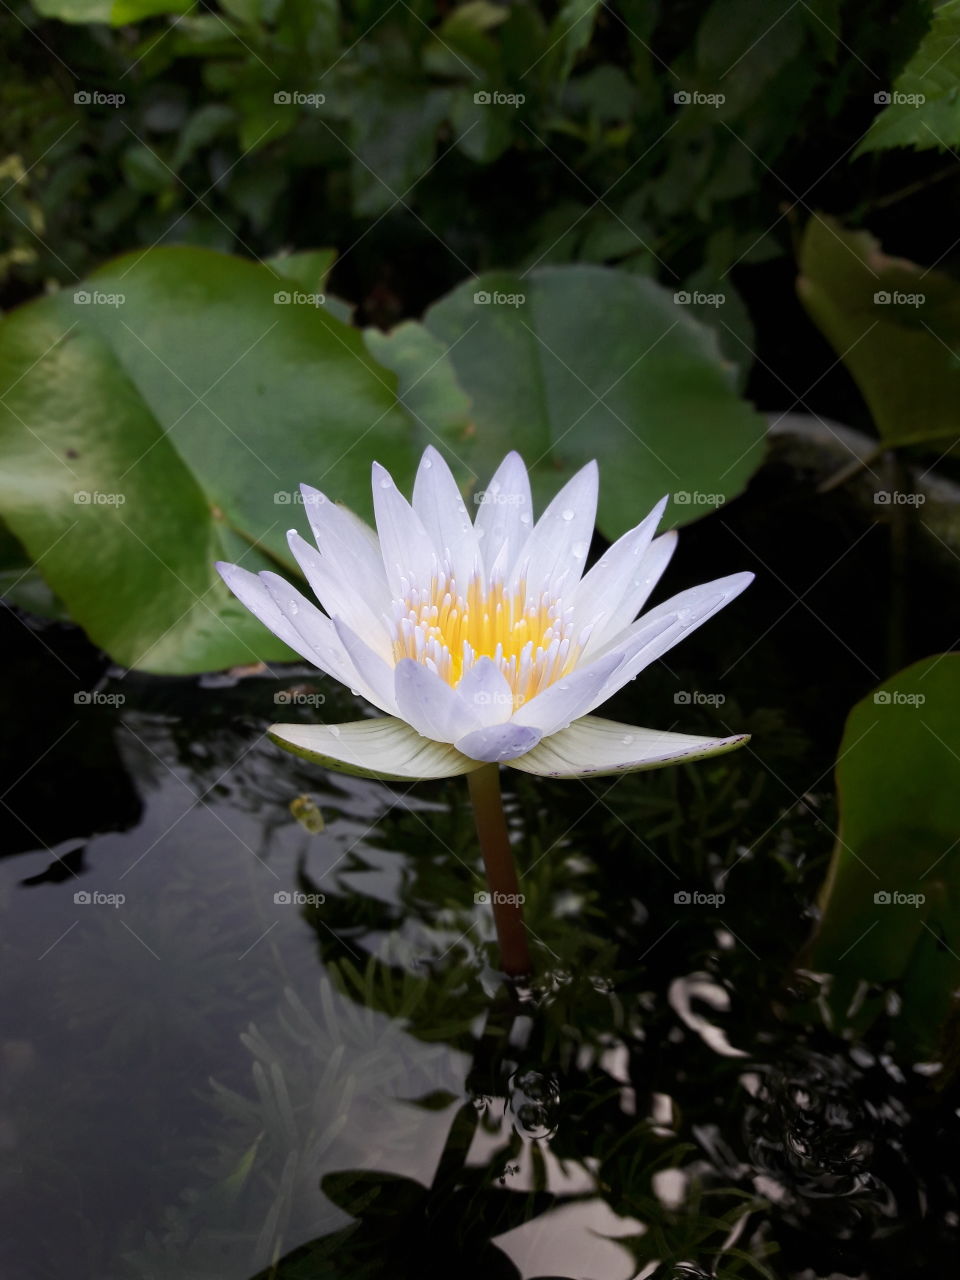 a beautiful lotus flowerwater